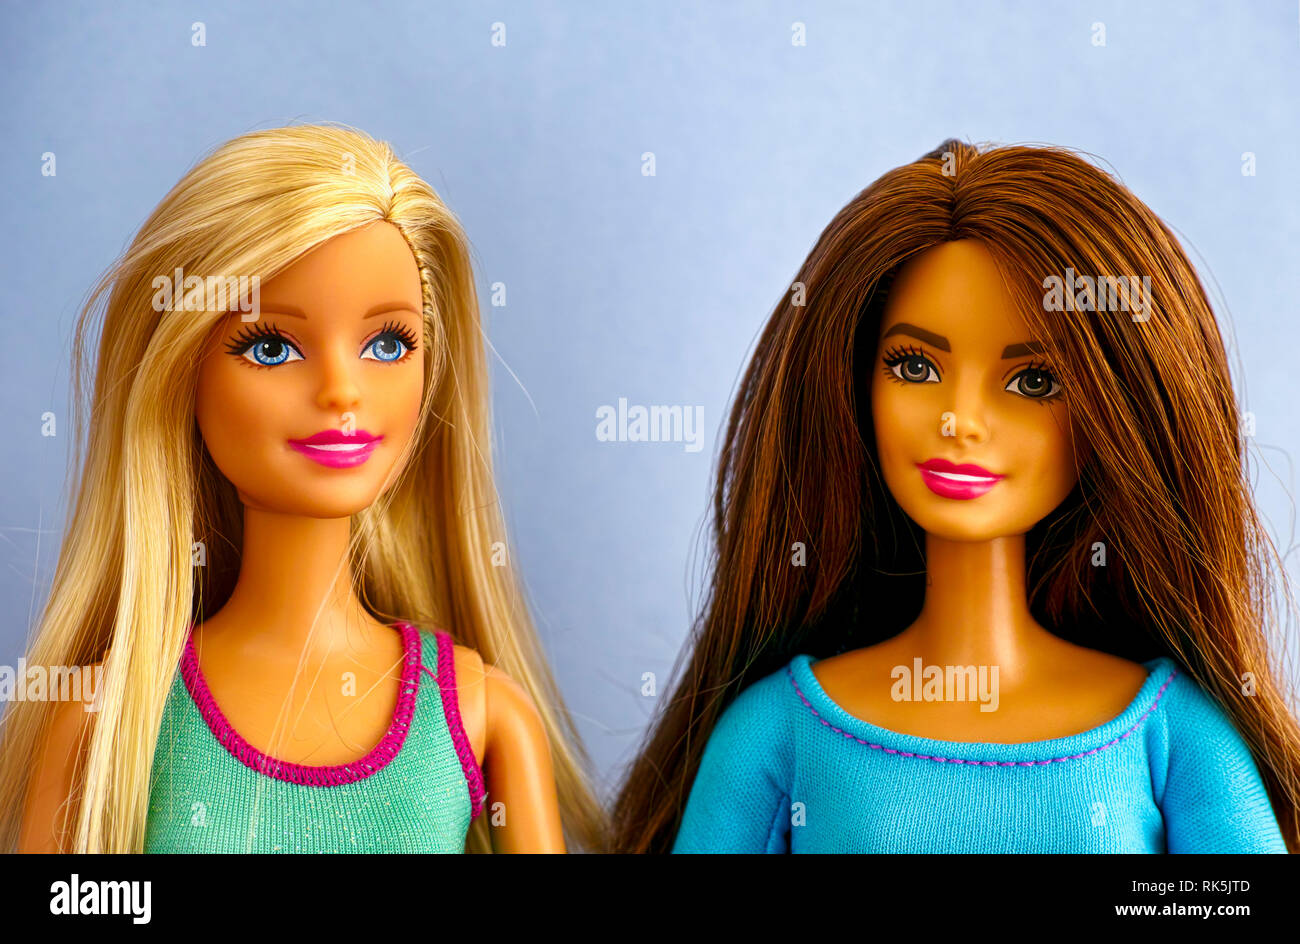 Barbie Dolls Stock Photos Barbie Dolls Stock Images Alamy